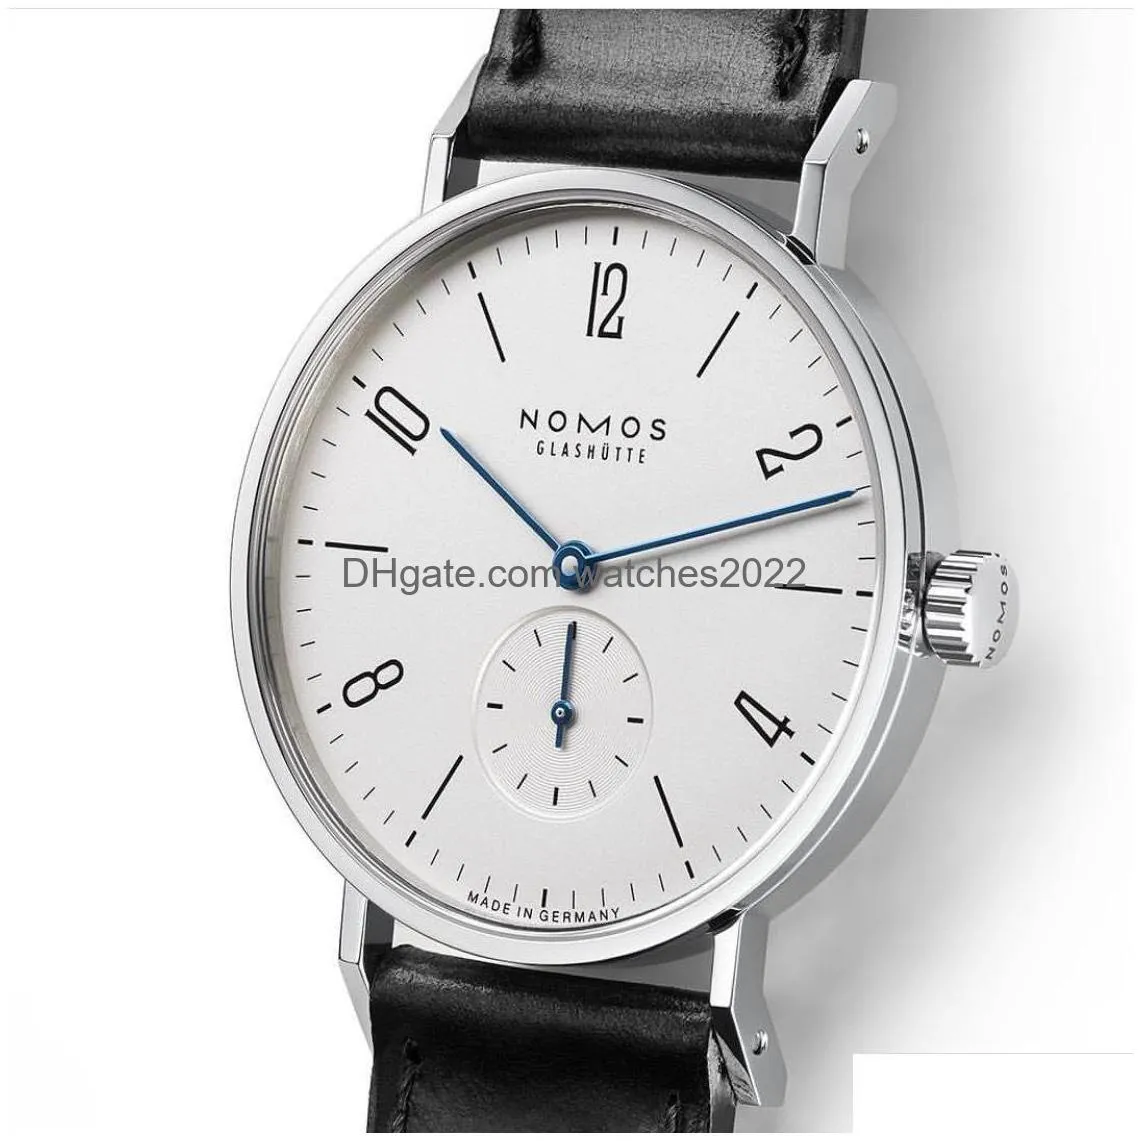  watches men and women minimalist design leather strap women fashion simple quartz water resistant watches